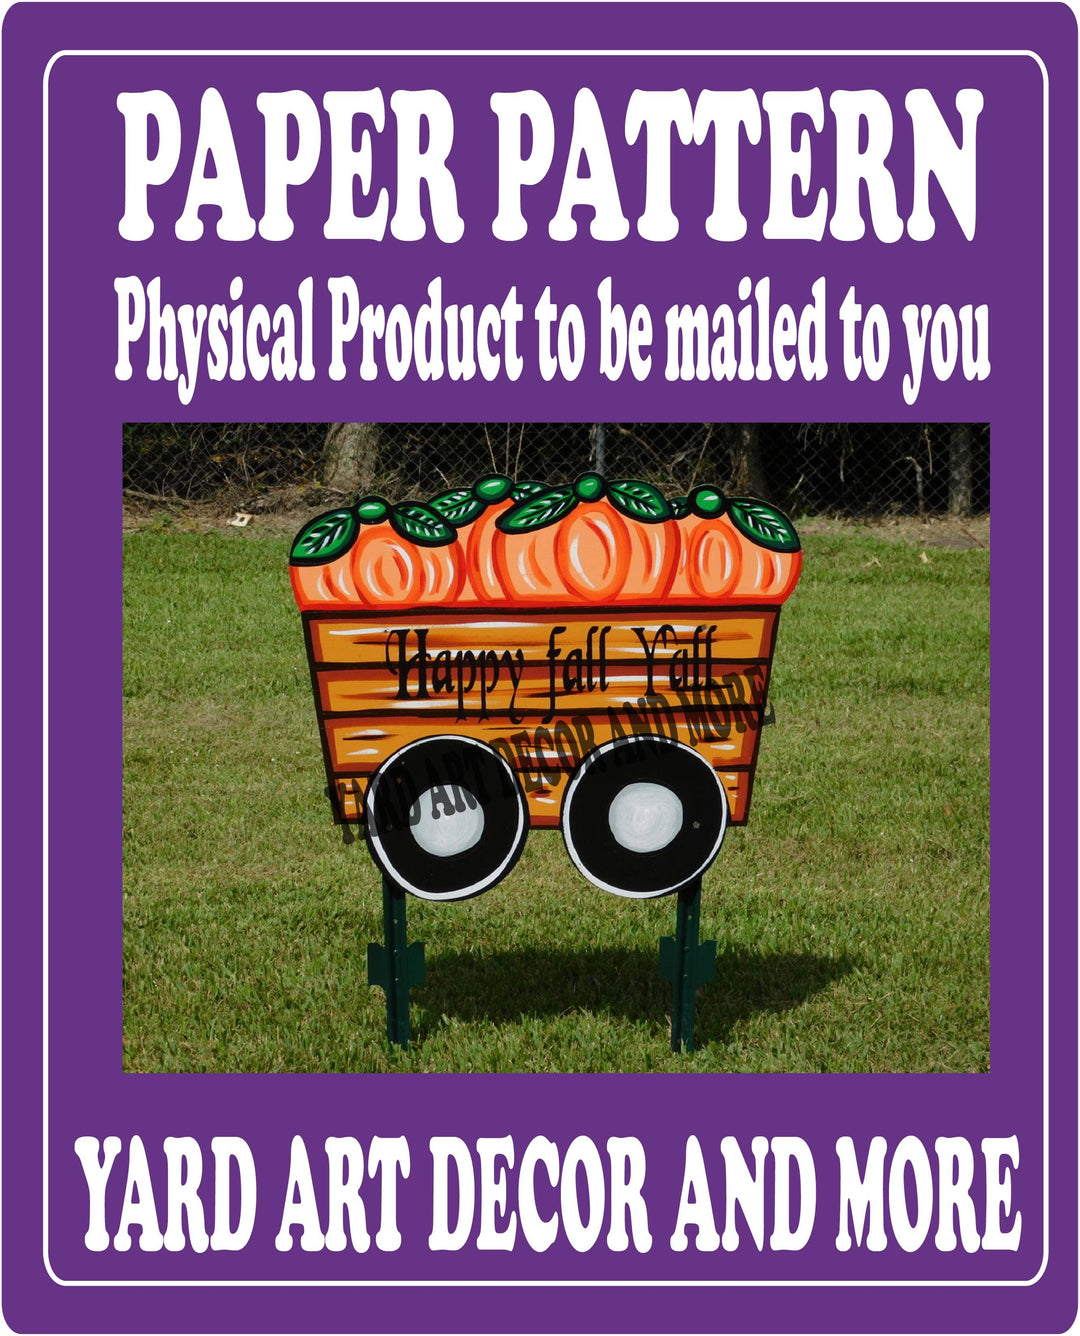 Happy Fall Y'all Card of Pumpkin yard art decor paper patterns